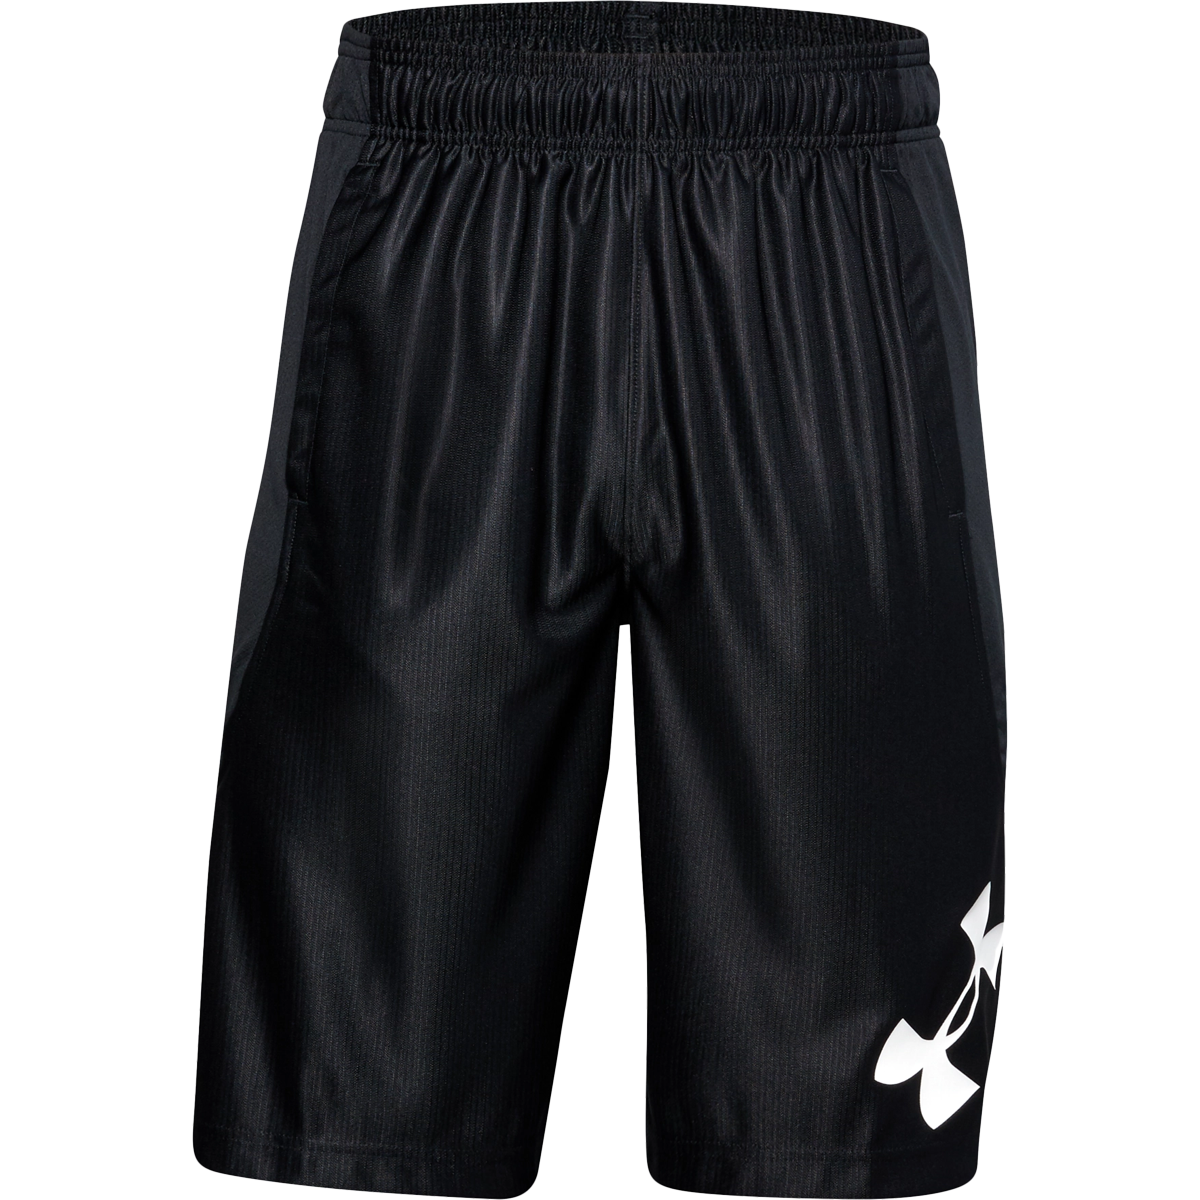 UNDER ARMOR UA BASELINE 10'' Shorts Men's Basketball Pants 1370220 001 Black